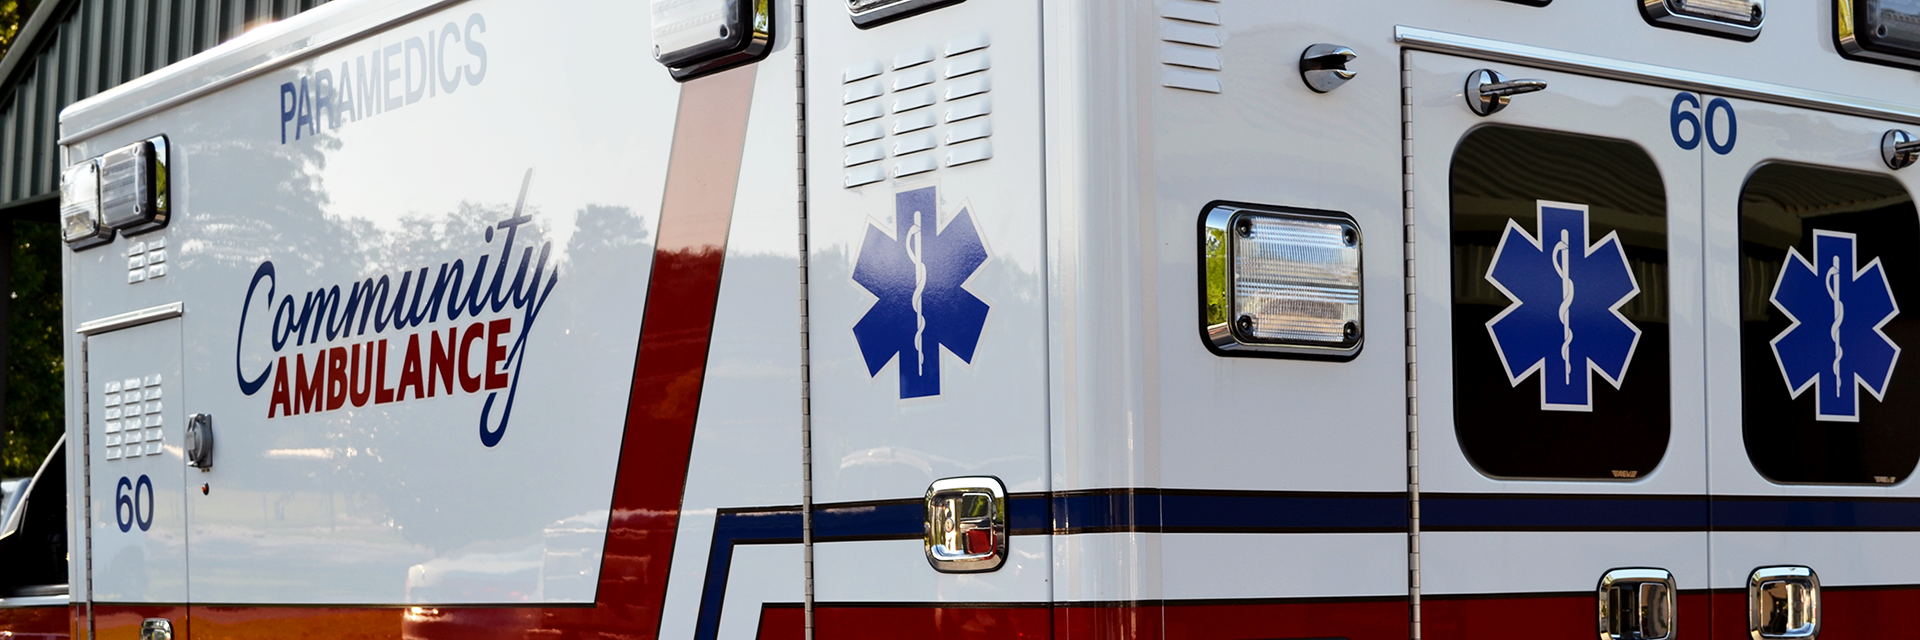 Picture of a Community Ambulance transportation vehicle